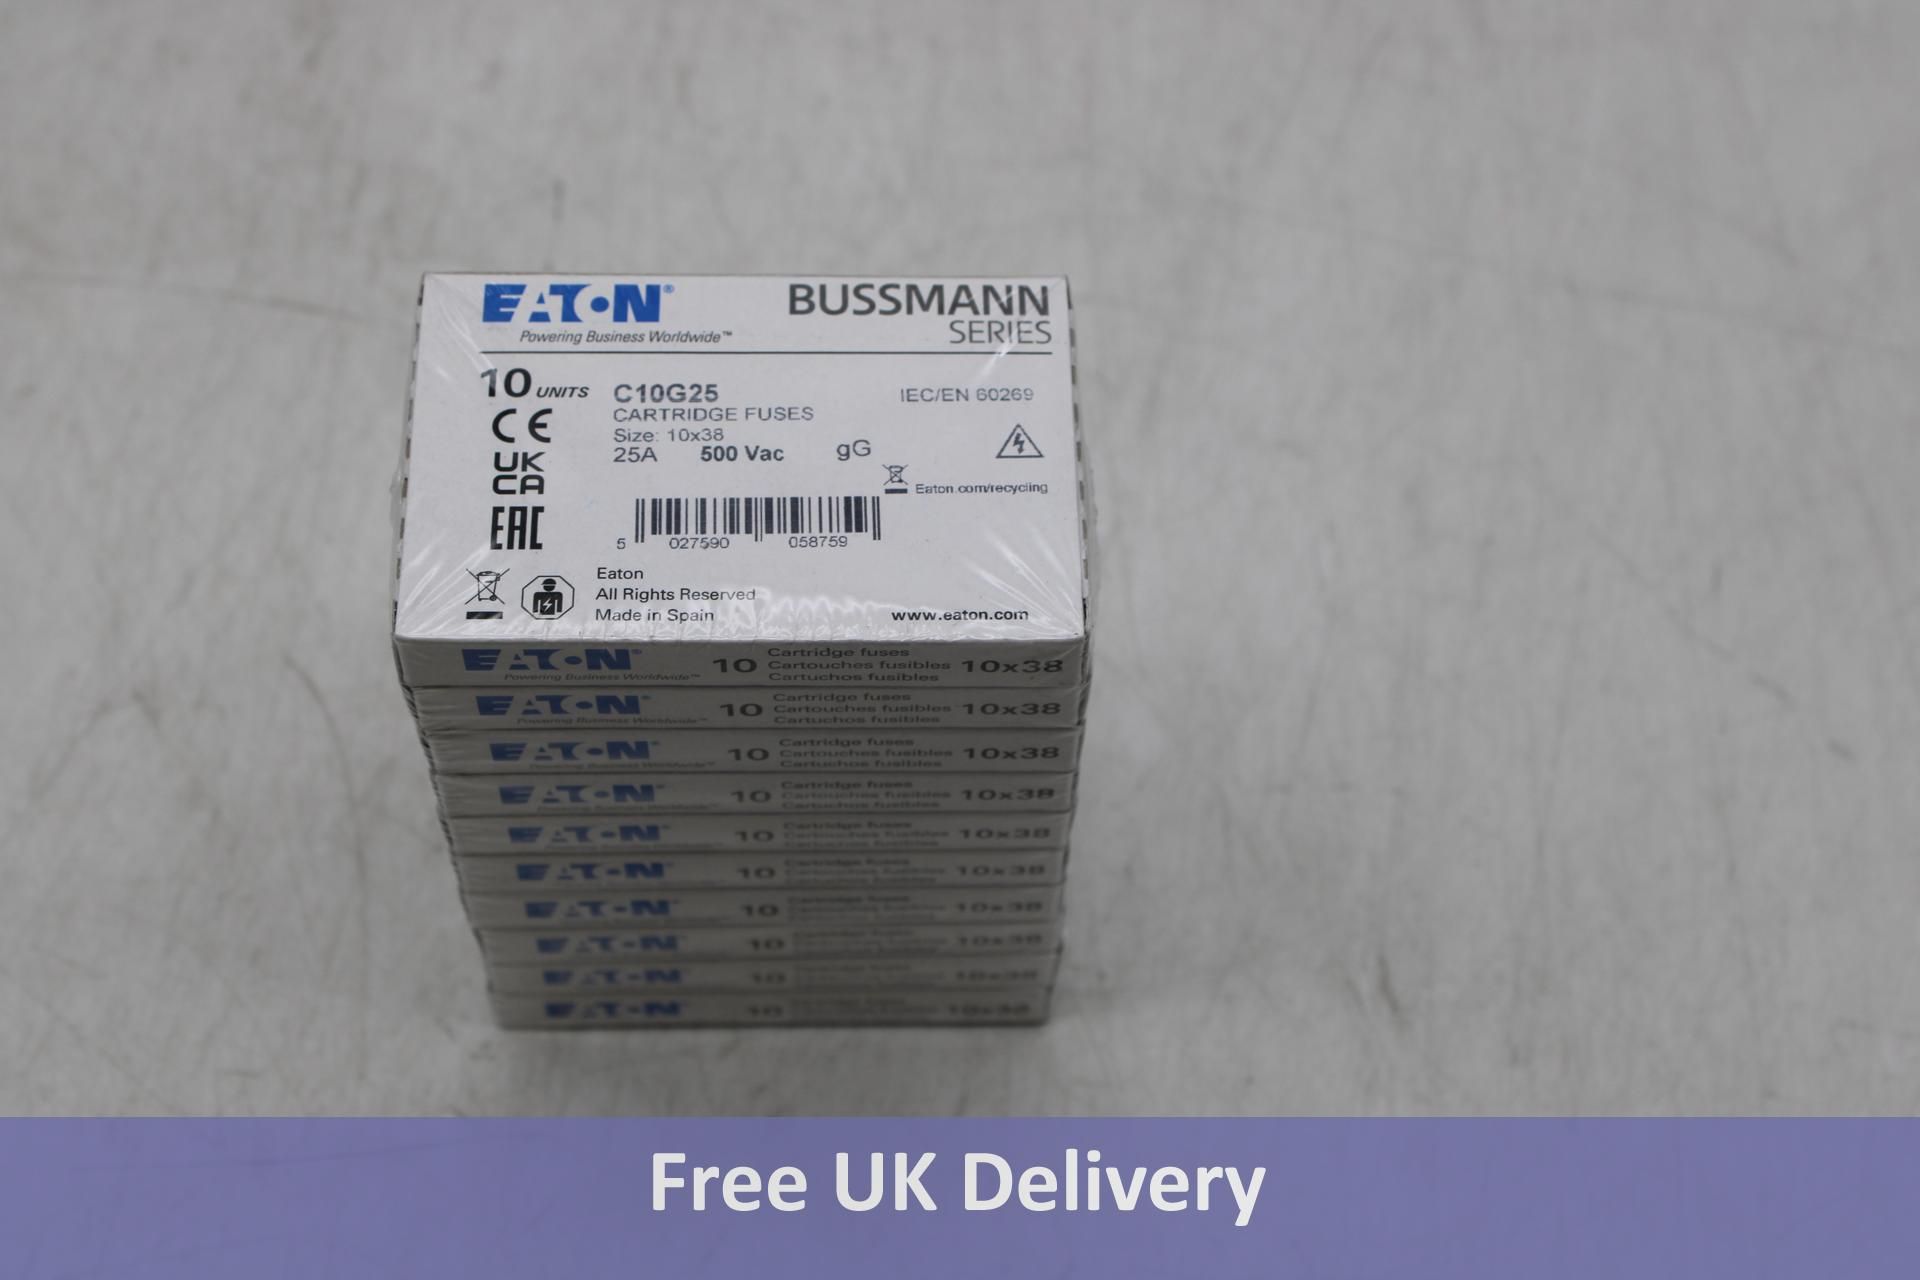 Ten packs of Ten Eaton Bussmann Series C10G25 Cylindrical Cartridge Fuse, 10 X 38, 500V 25A